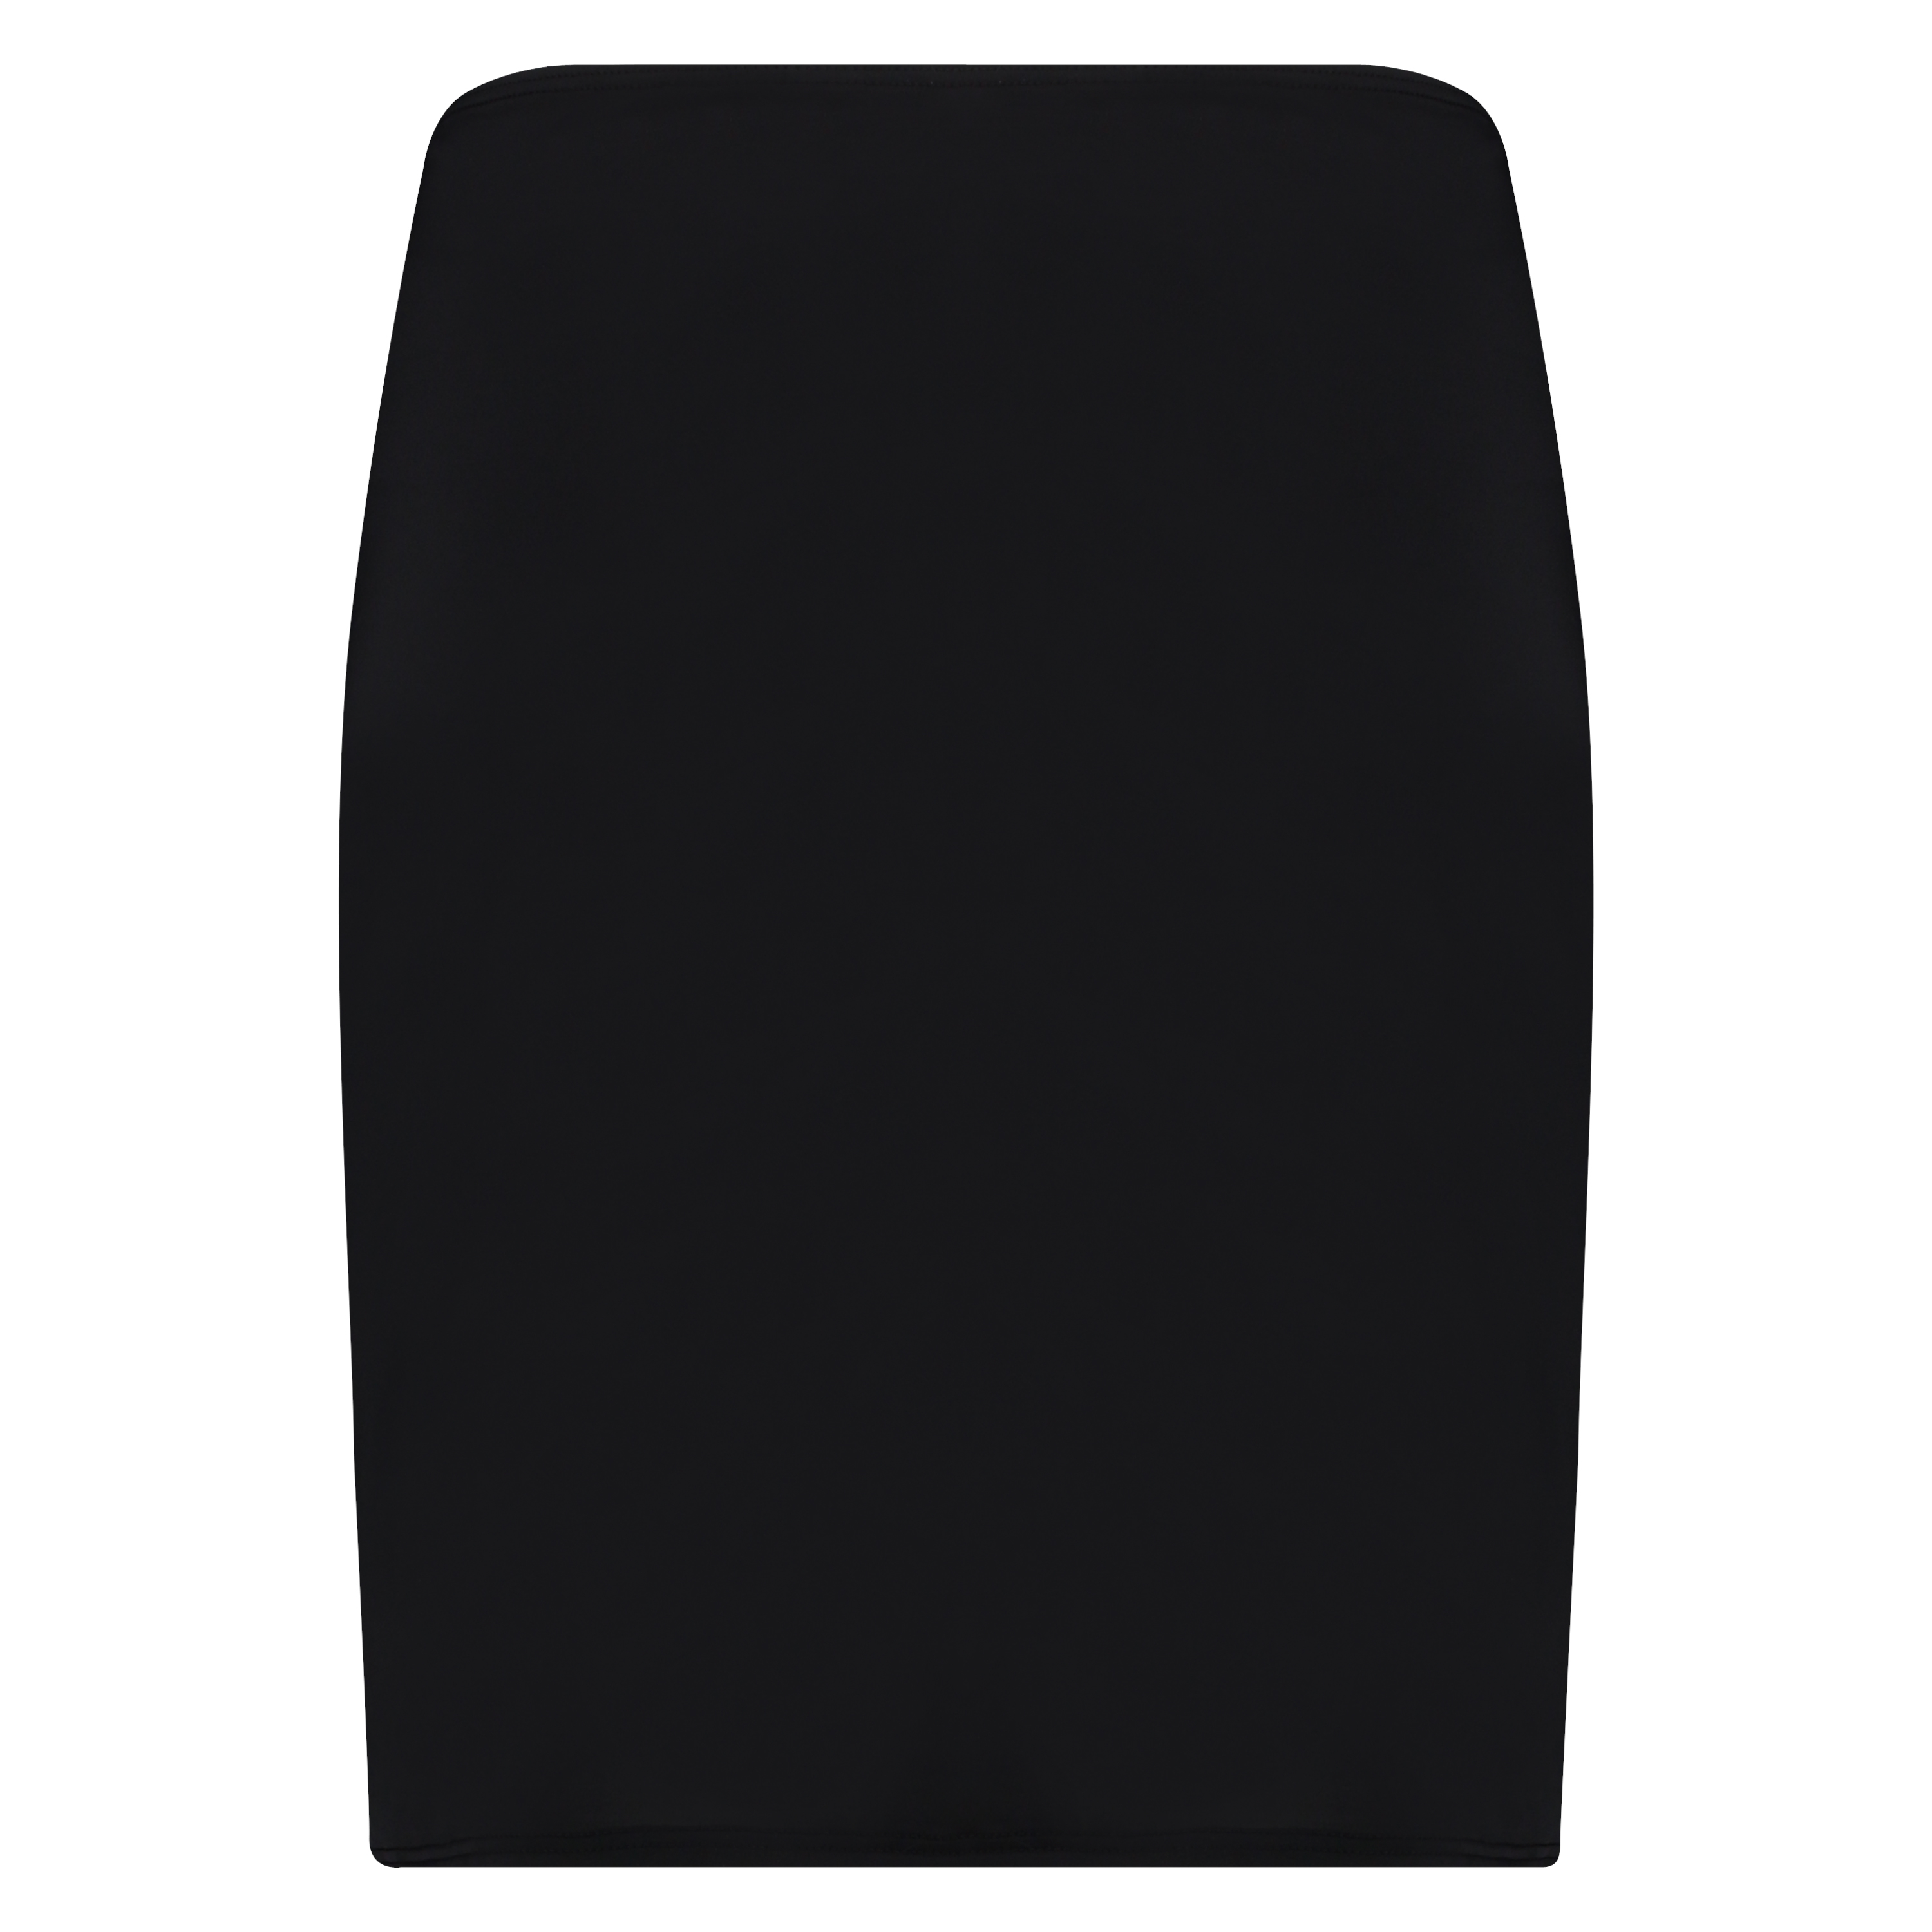 Smoothing underskirt - Level 1, Black, main